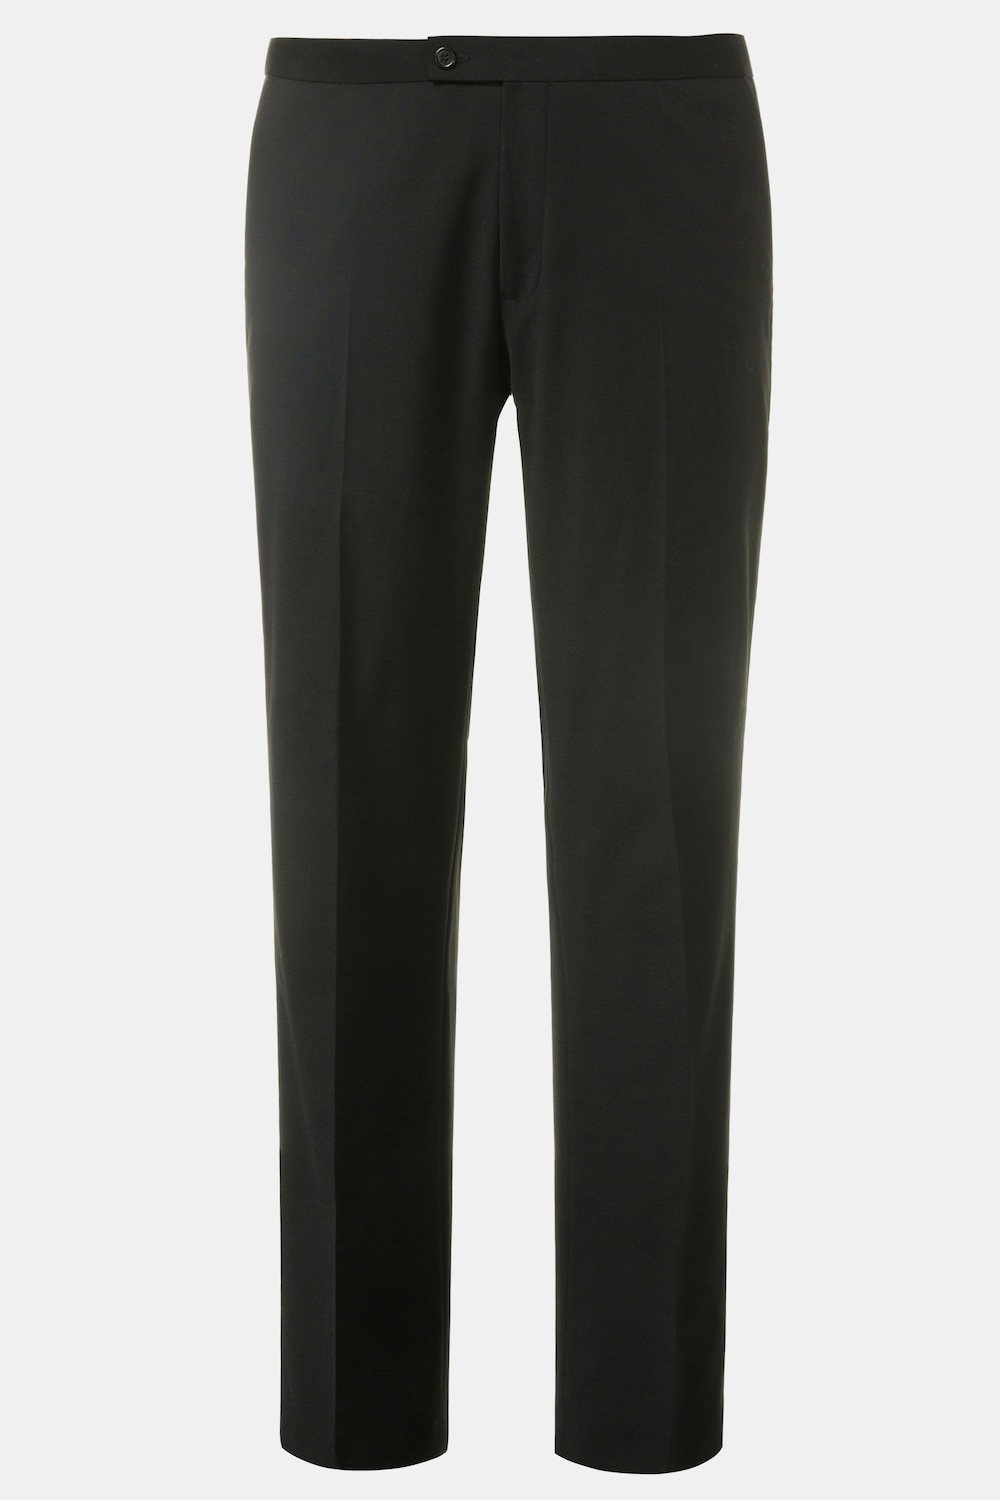 Plus Size Tuxedo Pants, Man, black, size: 33, polyester/viscose/wool, JP1880